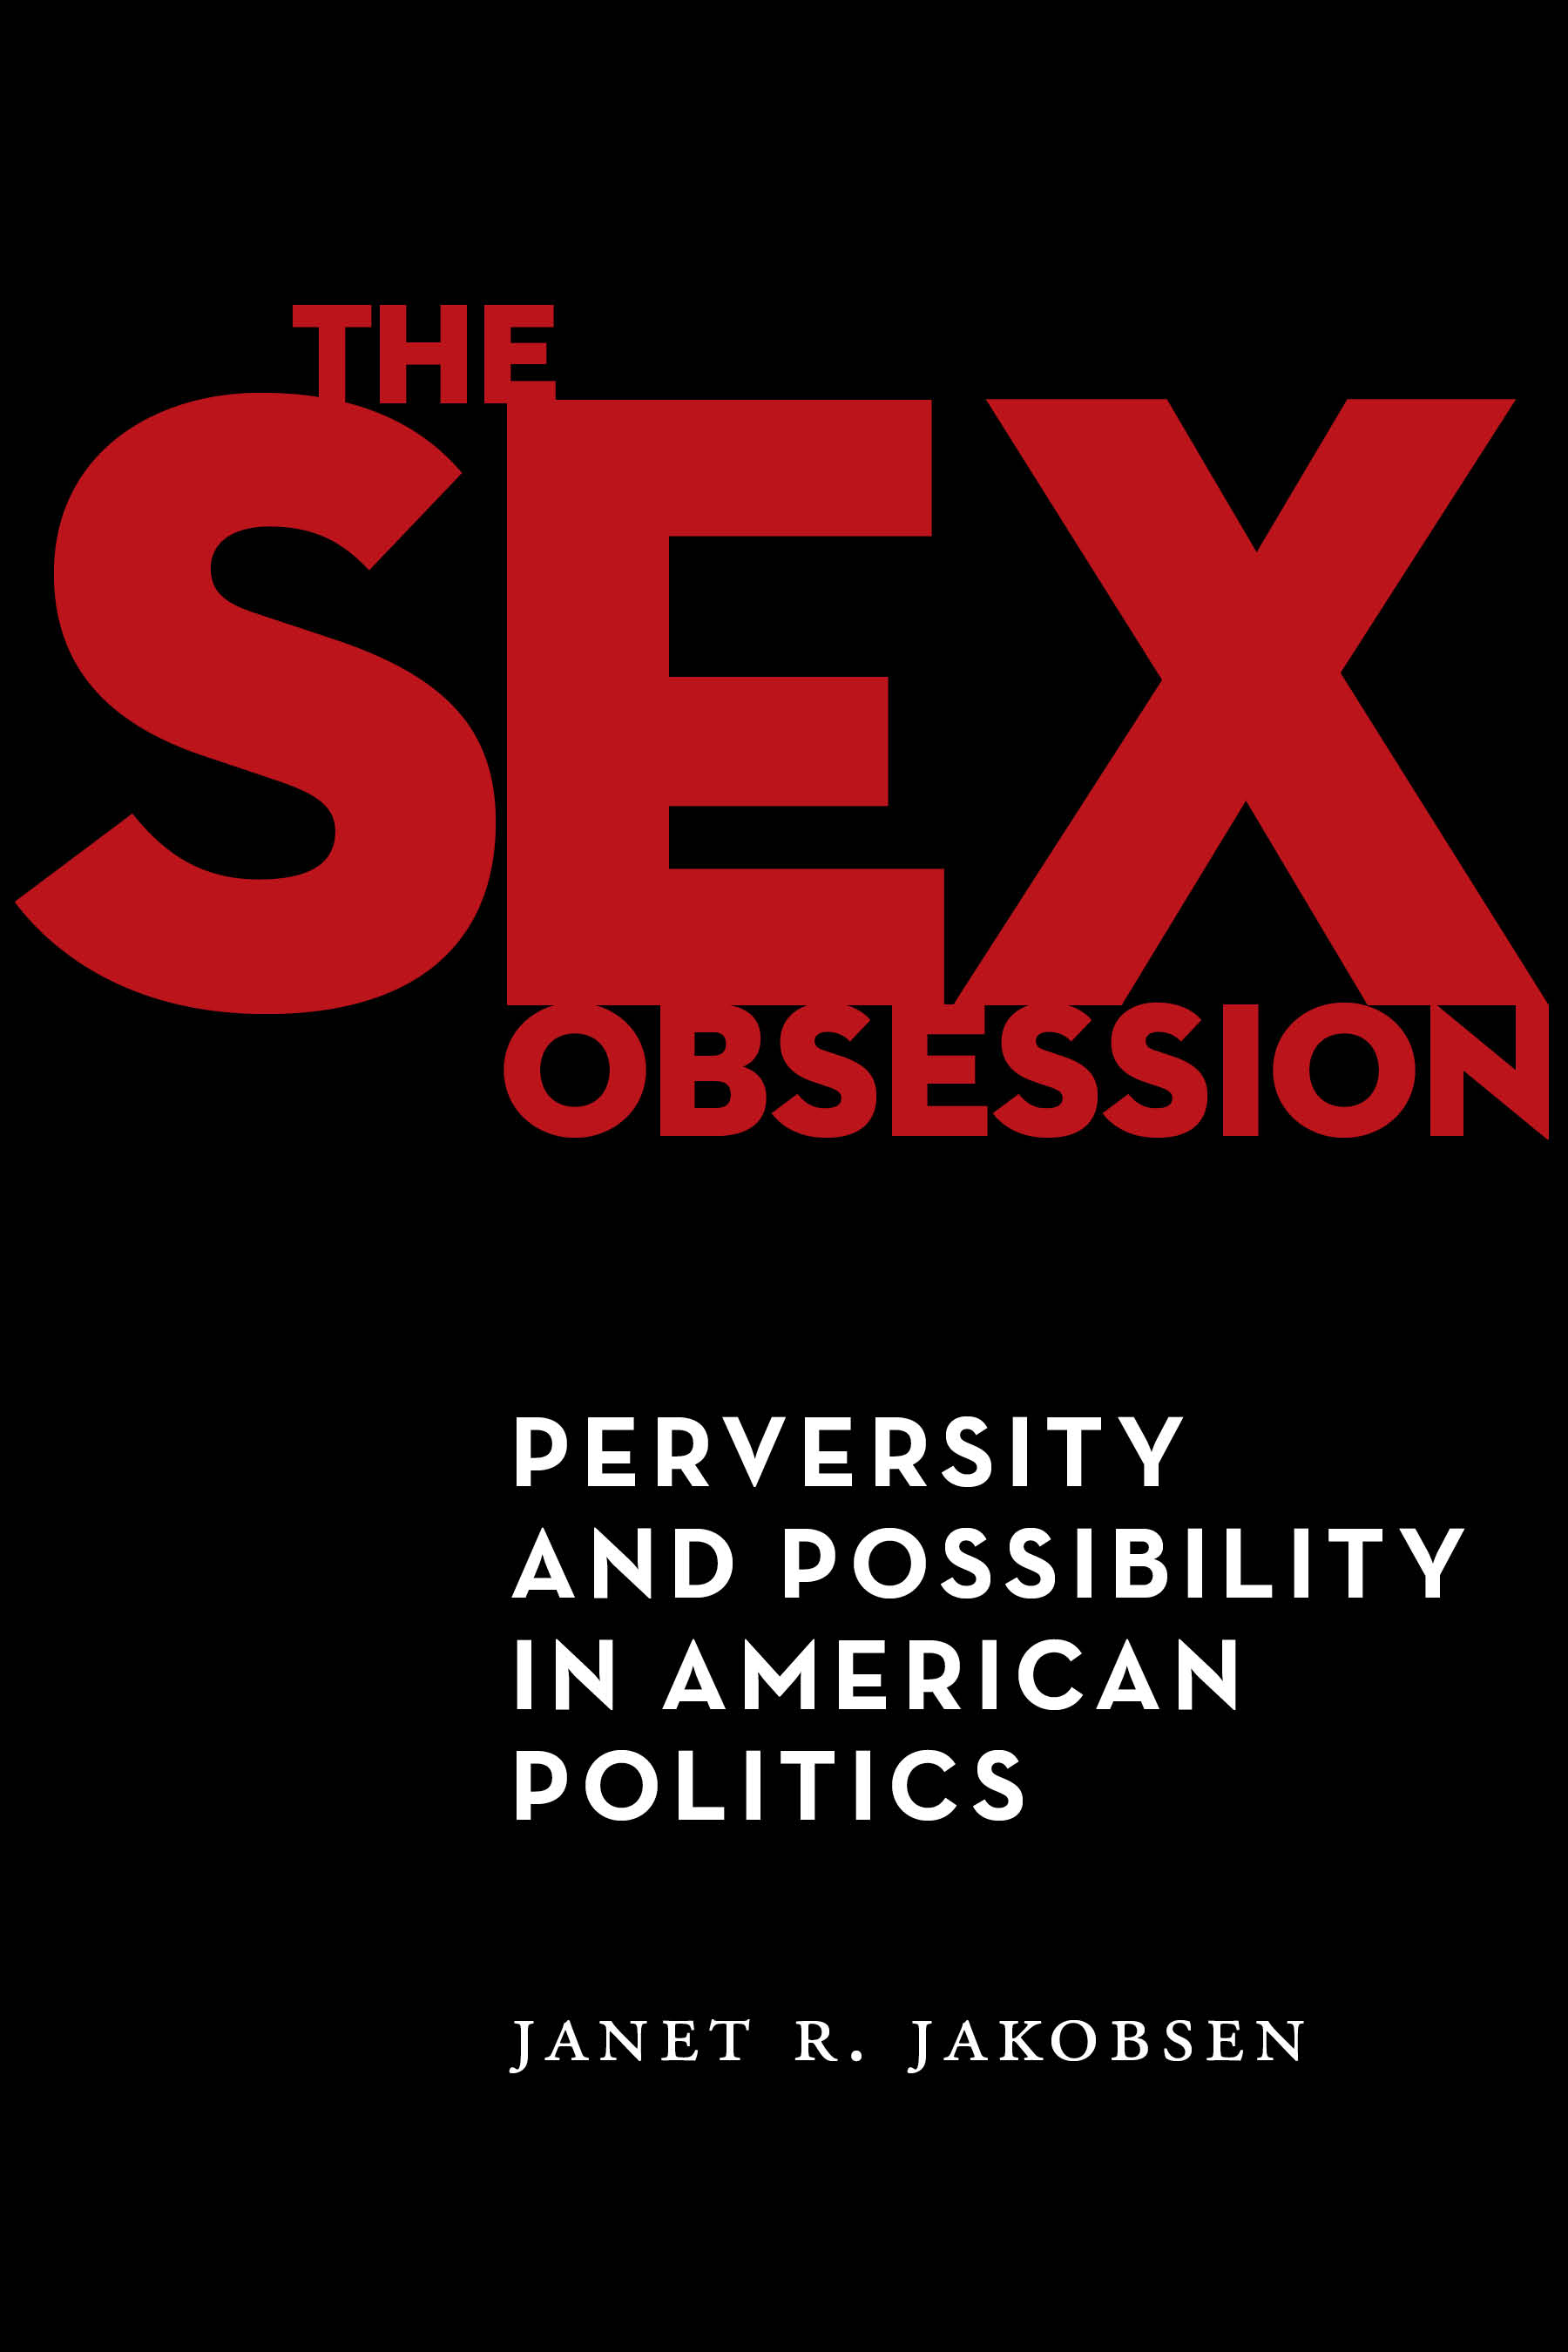 Professor Janet Jakobsen's book, The Sex Obsession